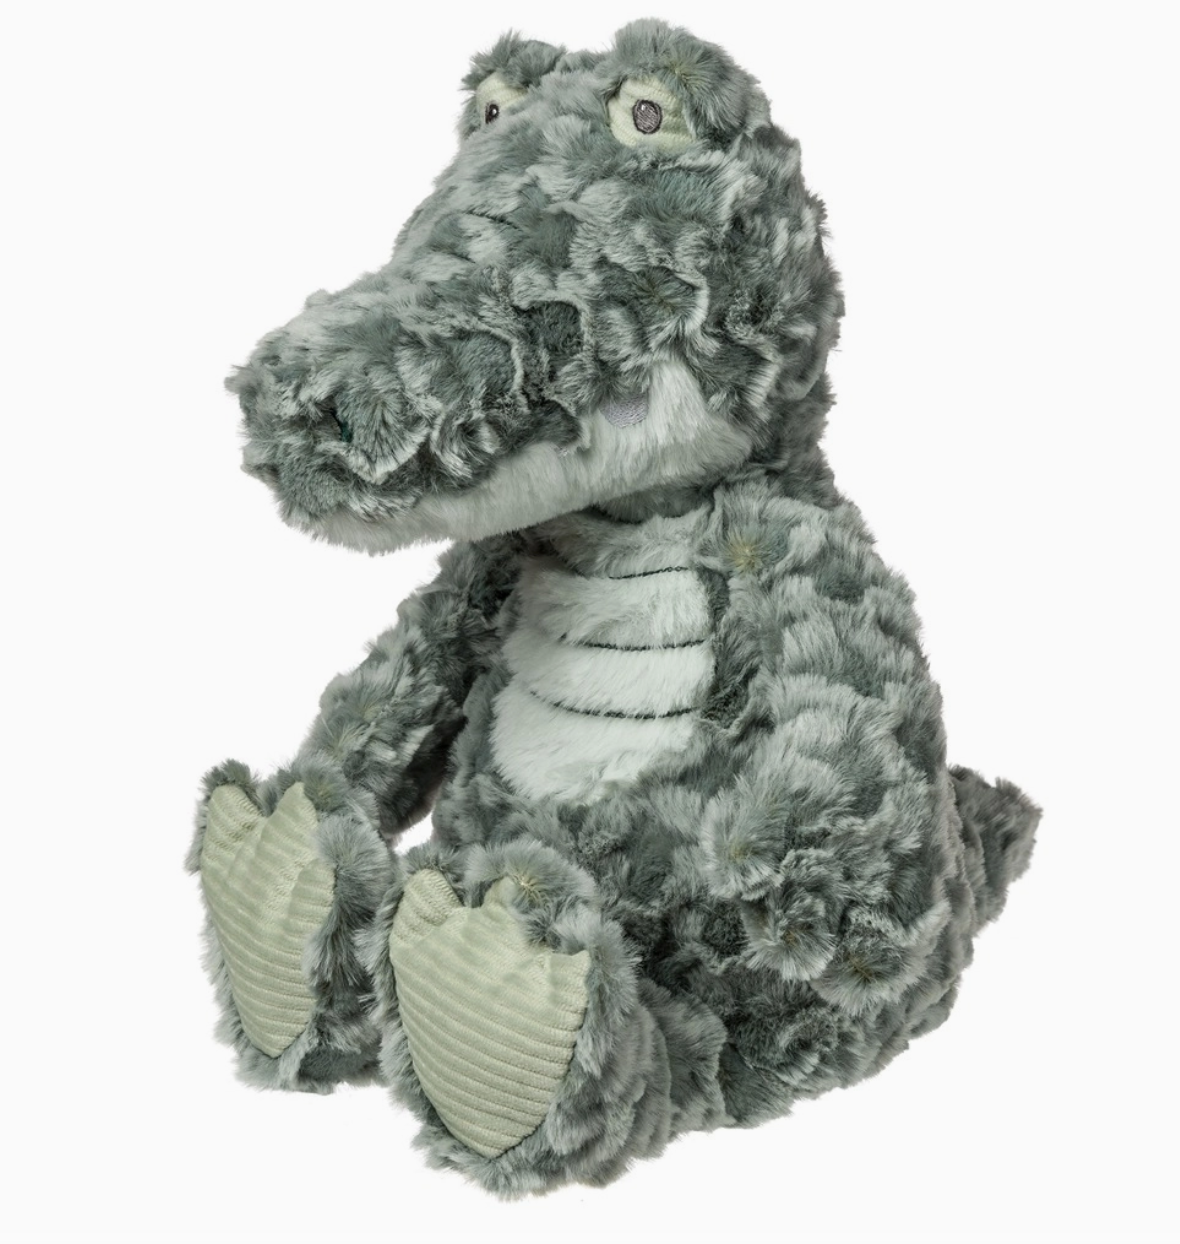 Afrique Alligator Soft Toy